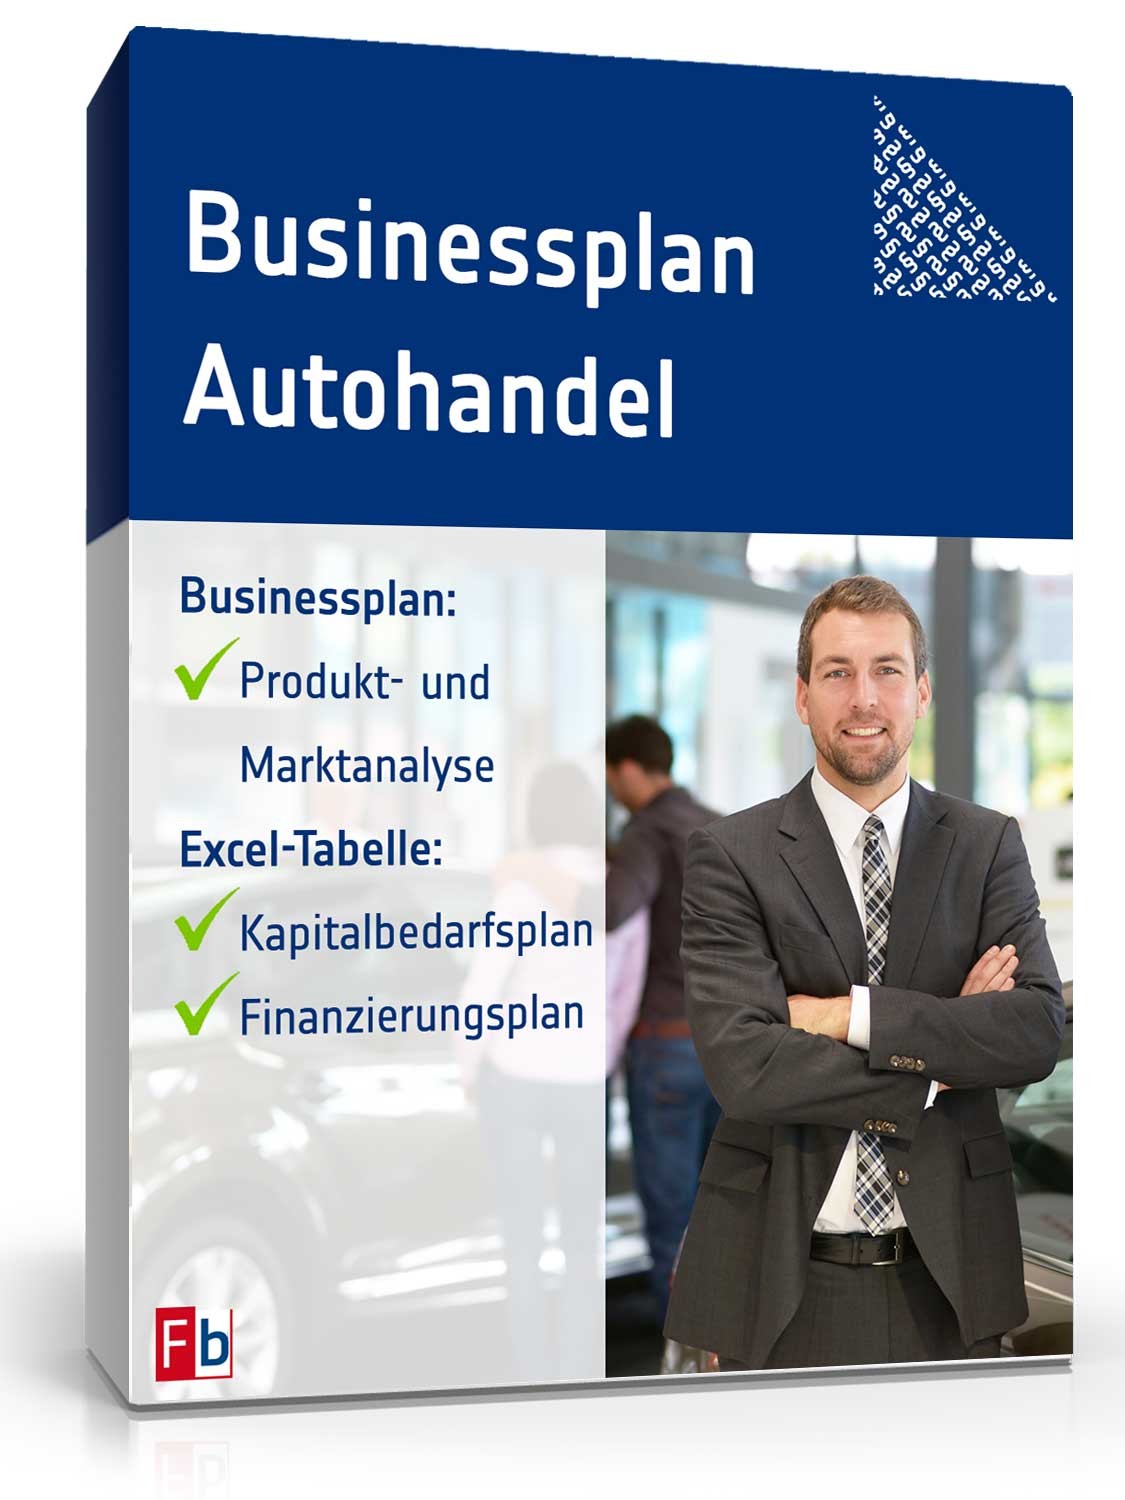 Hauptbild des Produkts: Businessplan Autohandel